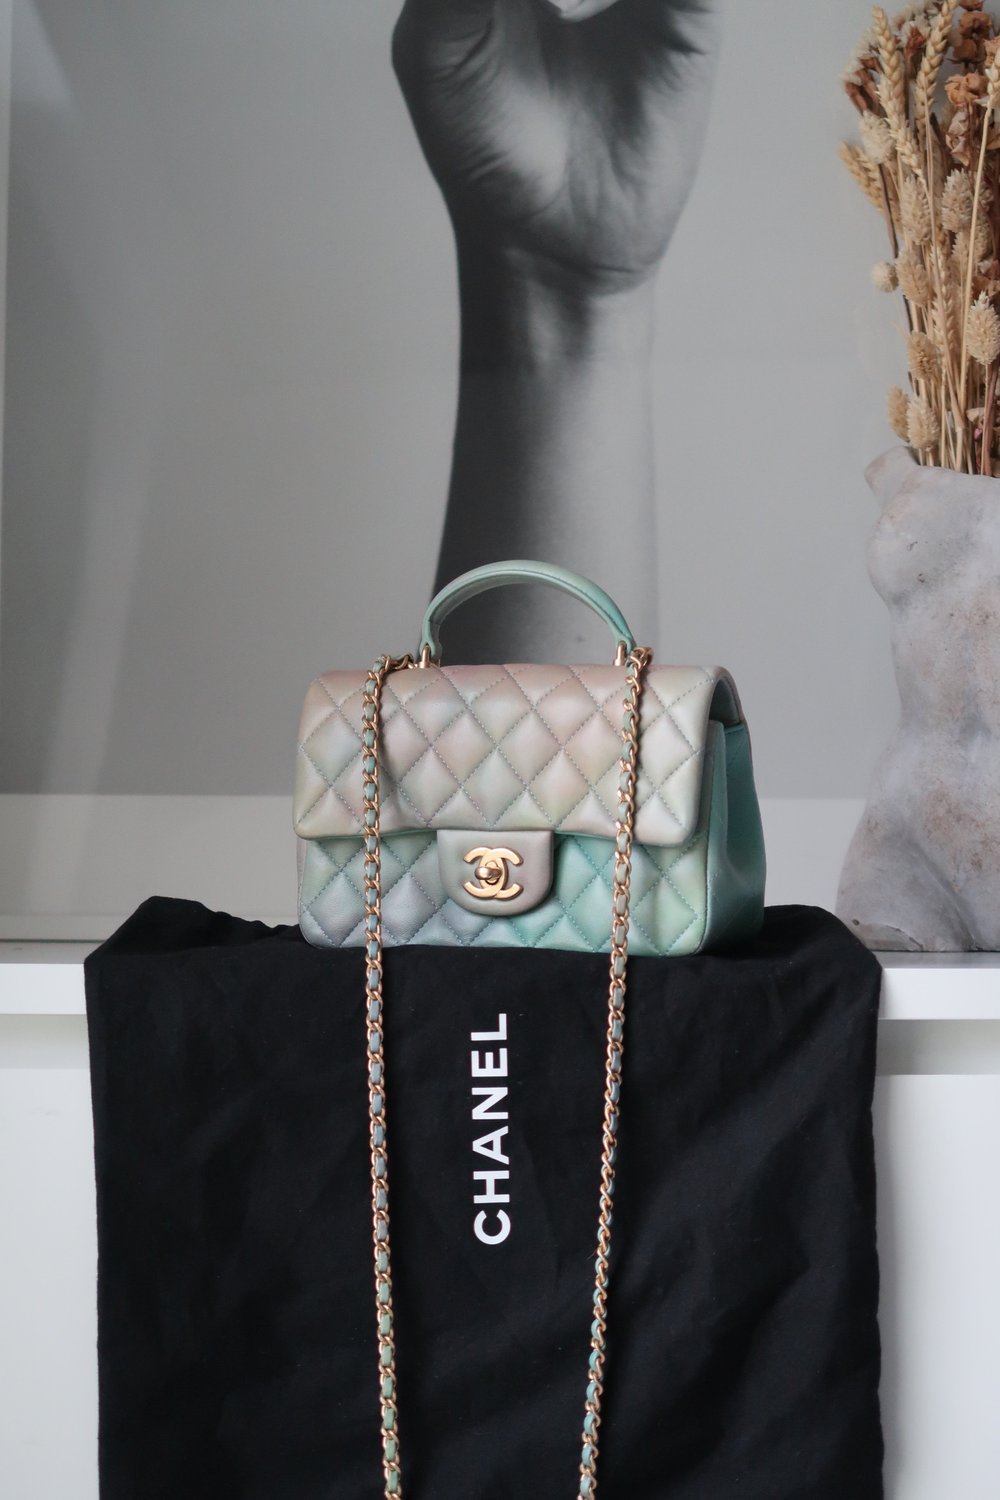 Chanel - Classic Flap Bag - Mini Rectangular Top Handle - Baby